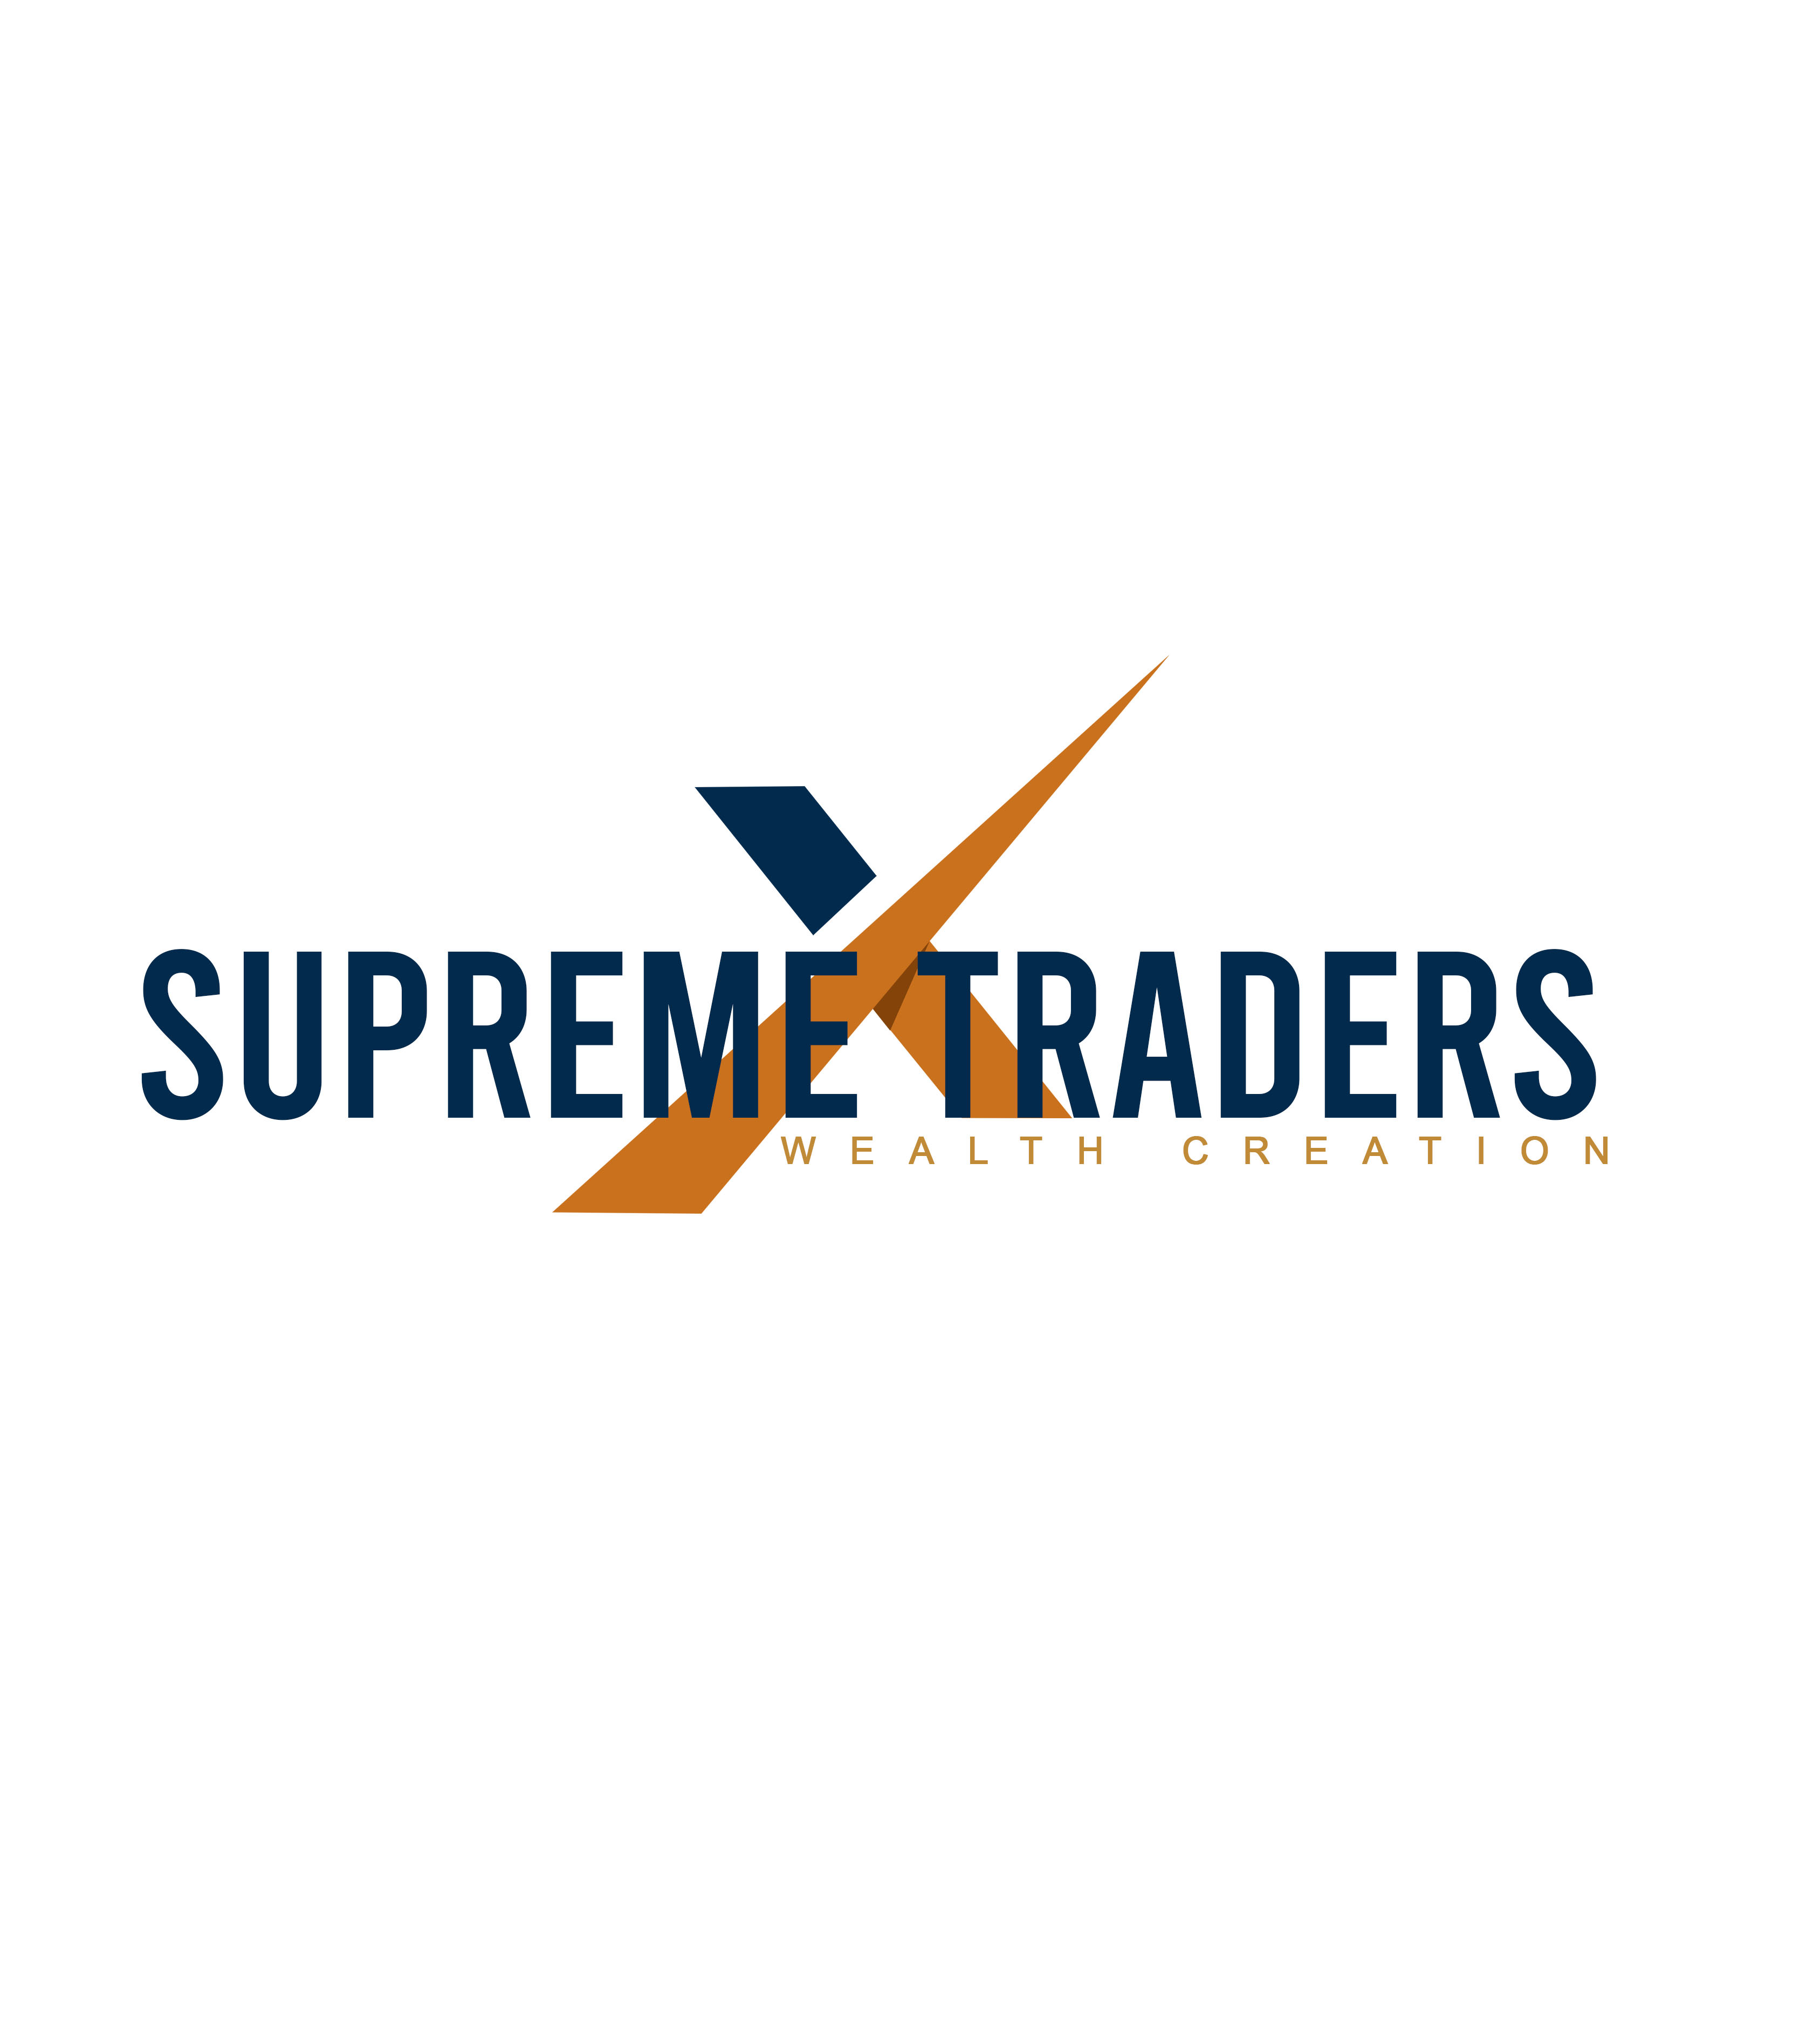 Trading! I use Supreme Values! (Updated)